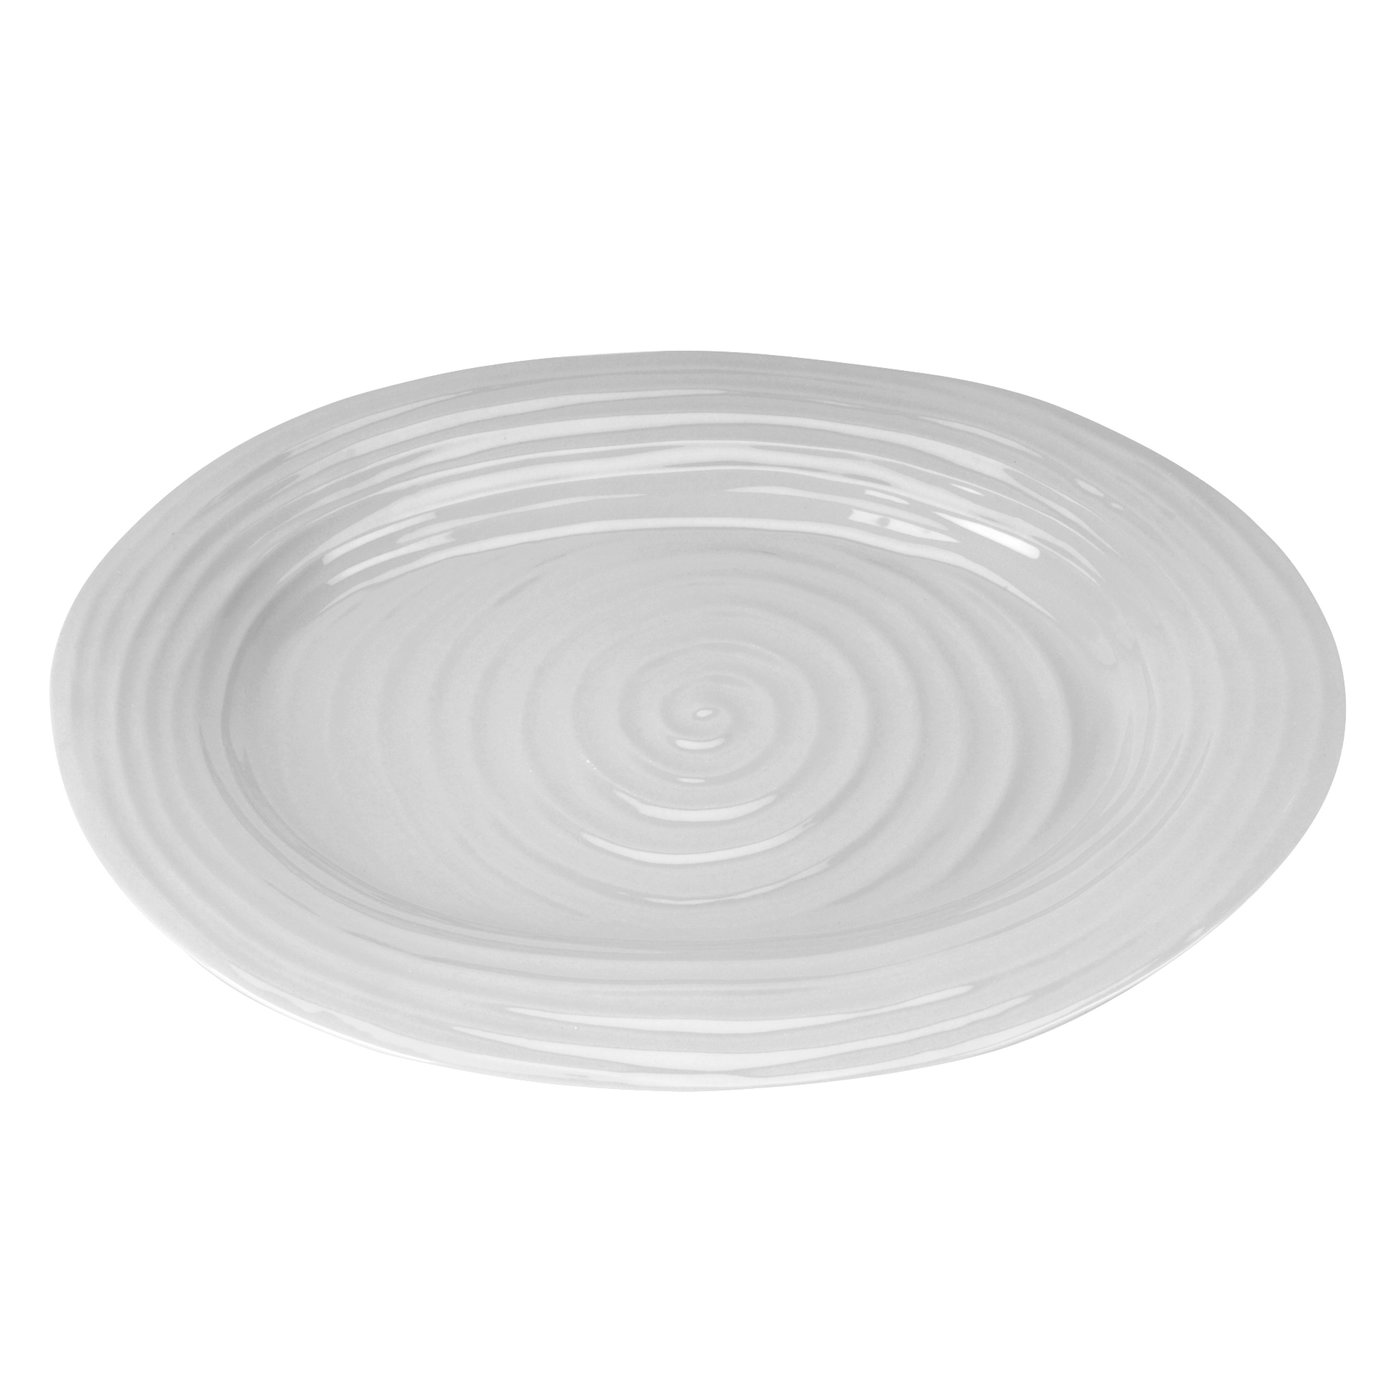 Sophie Conran Grey Medium Oval Platter image number null